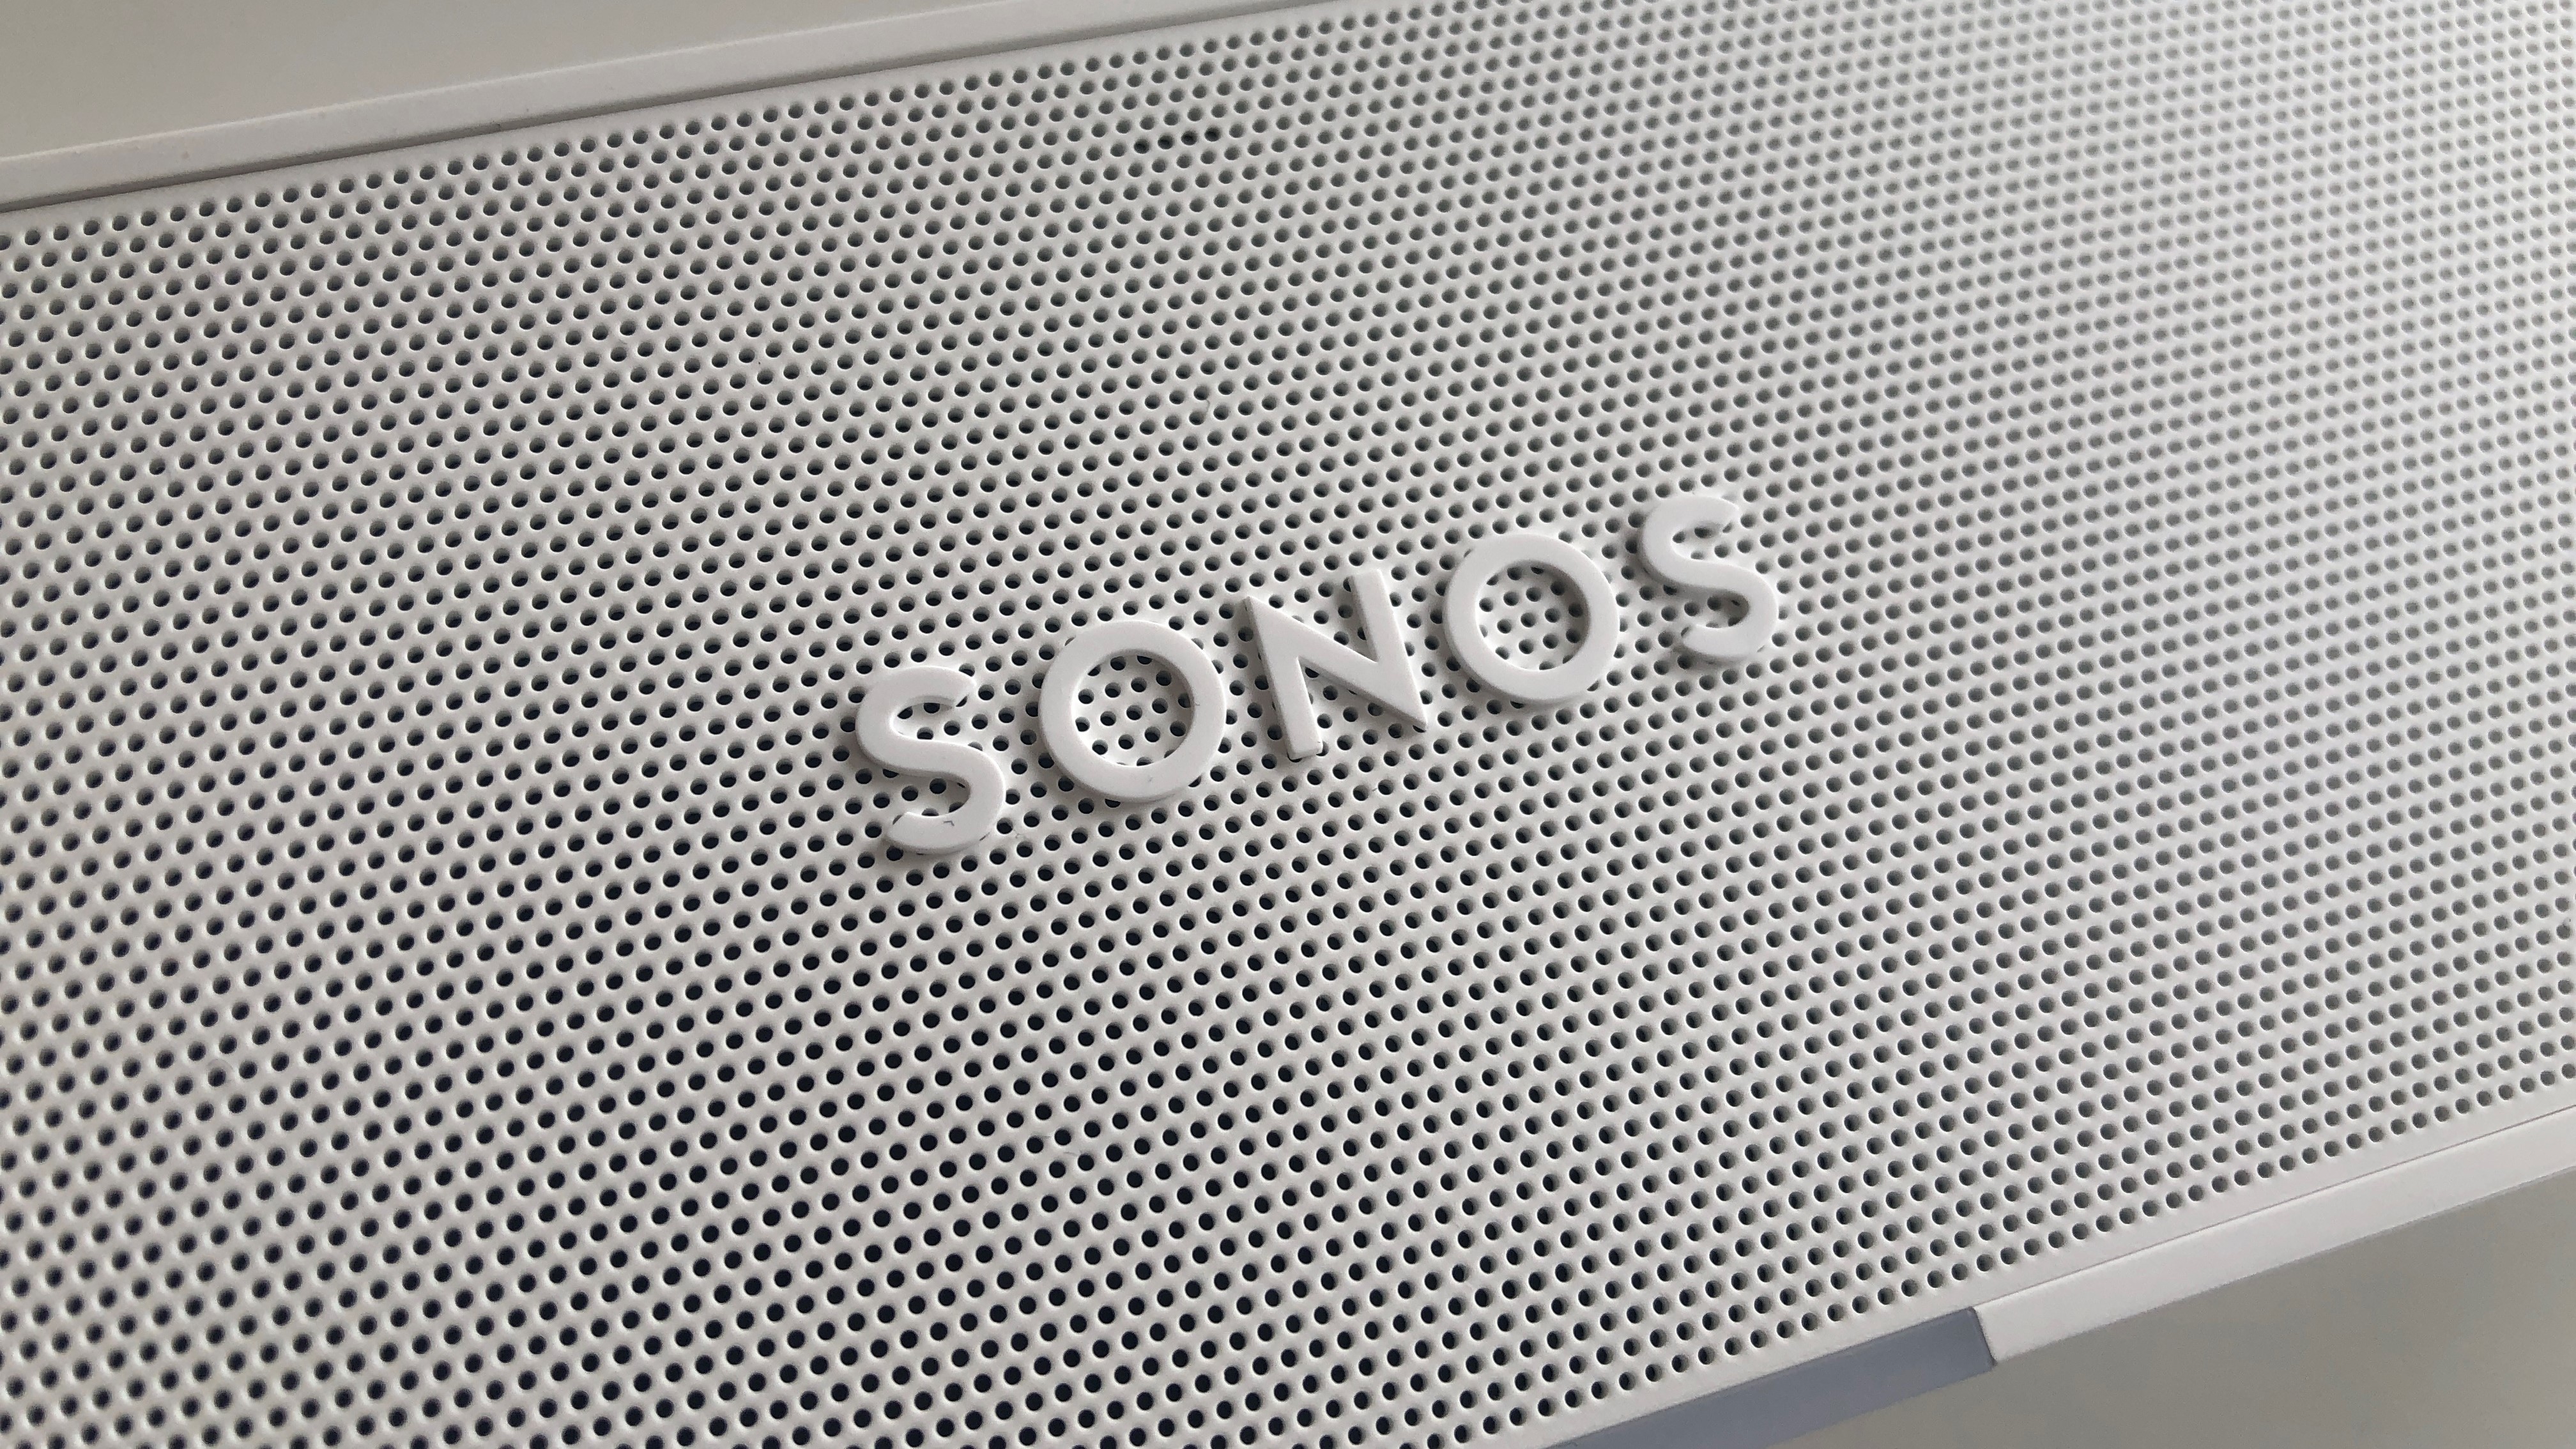 myg Guvernør Rastløs 5 ways to make Sonos speakers sound even better | Tom's Guide